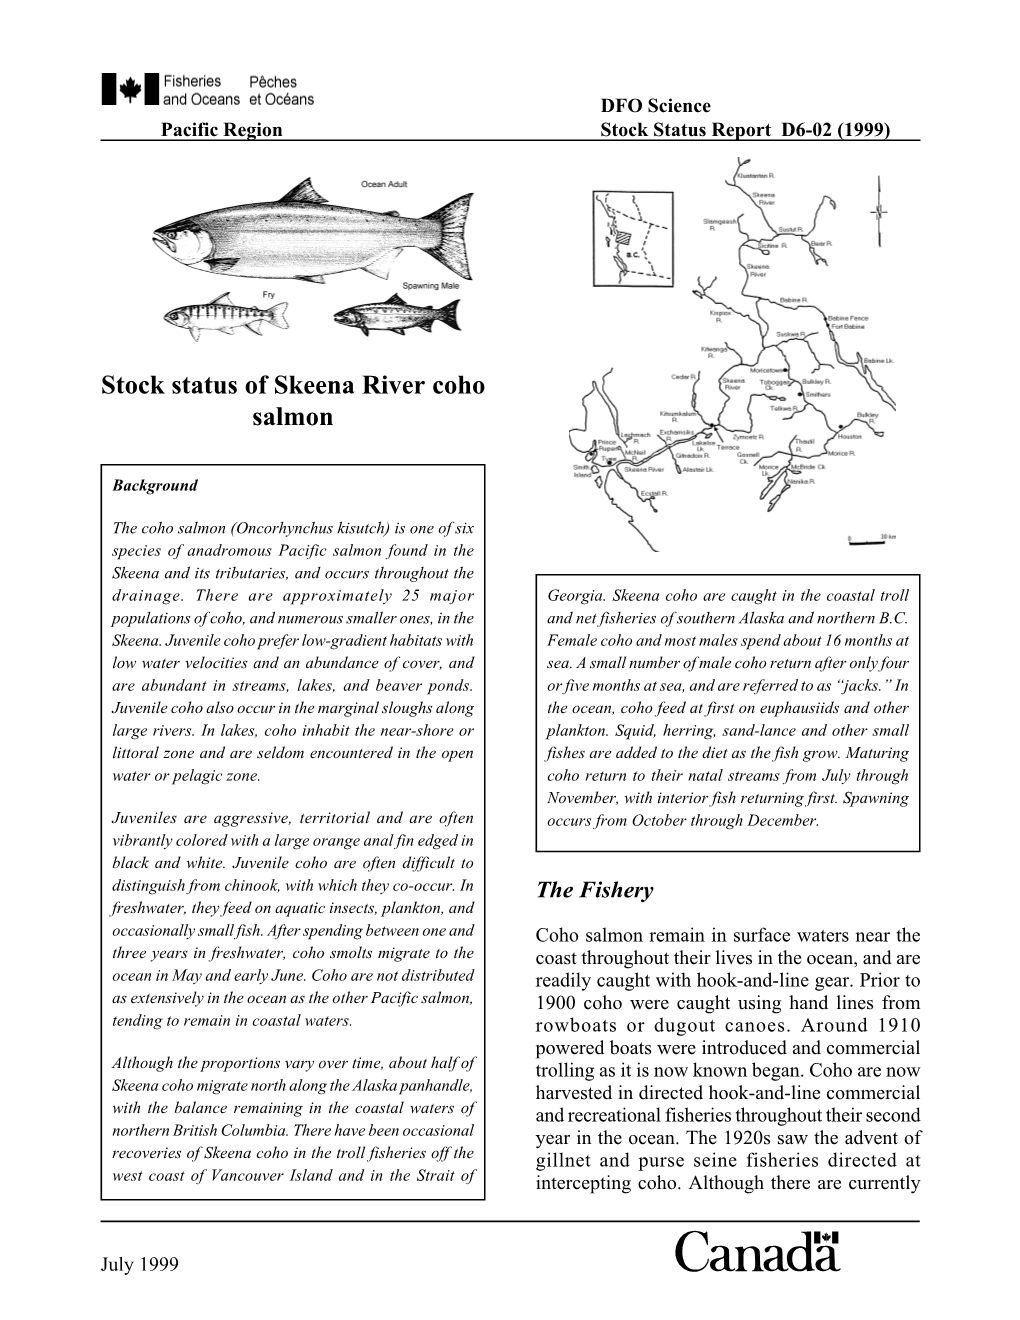 Stock Status of Skeena River Coho Salmon